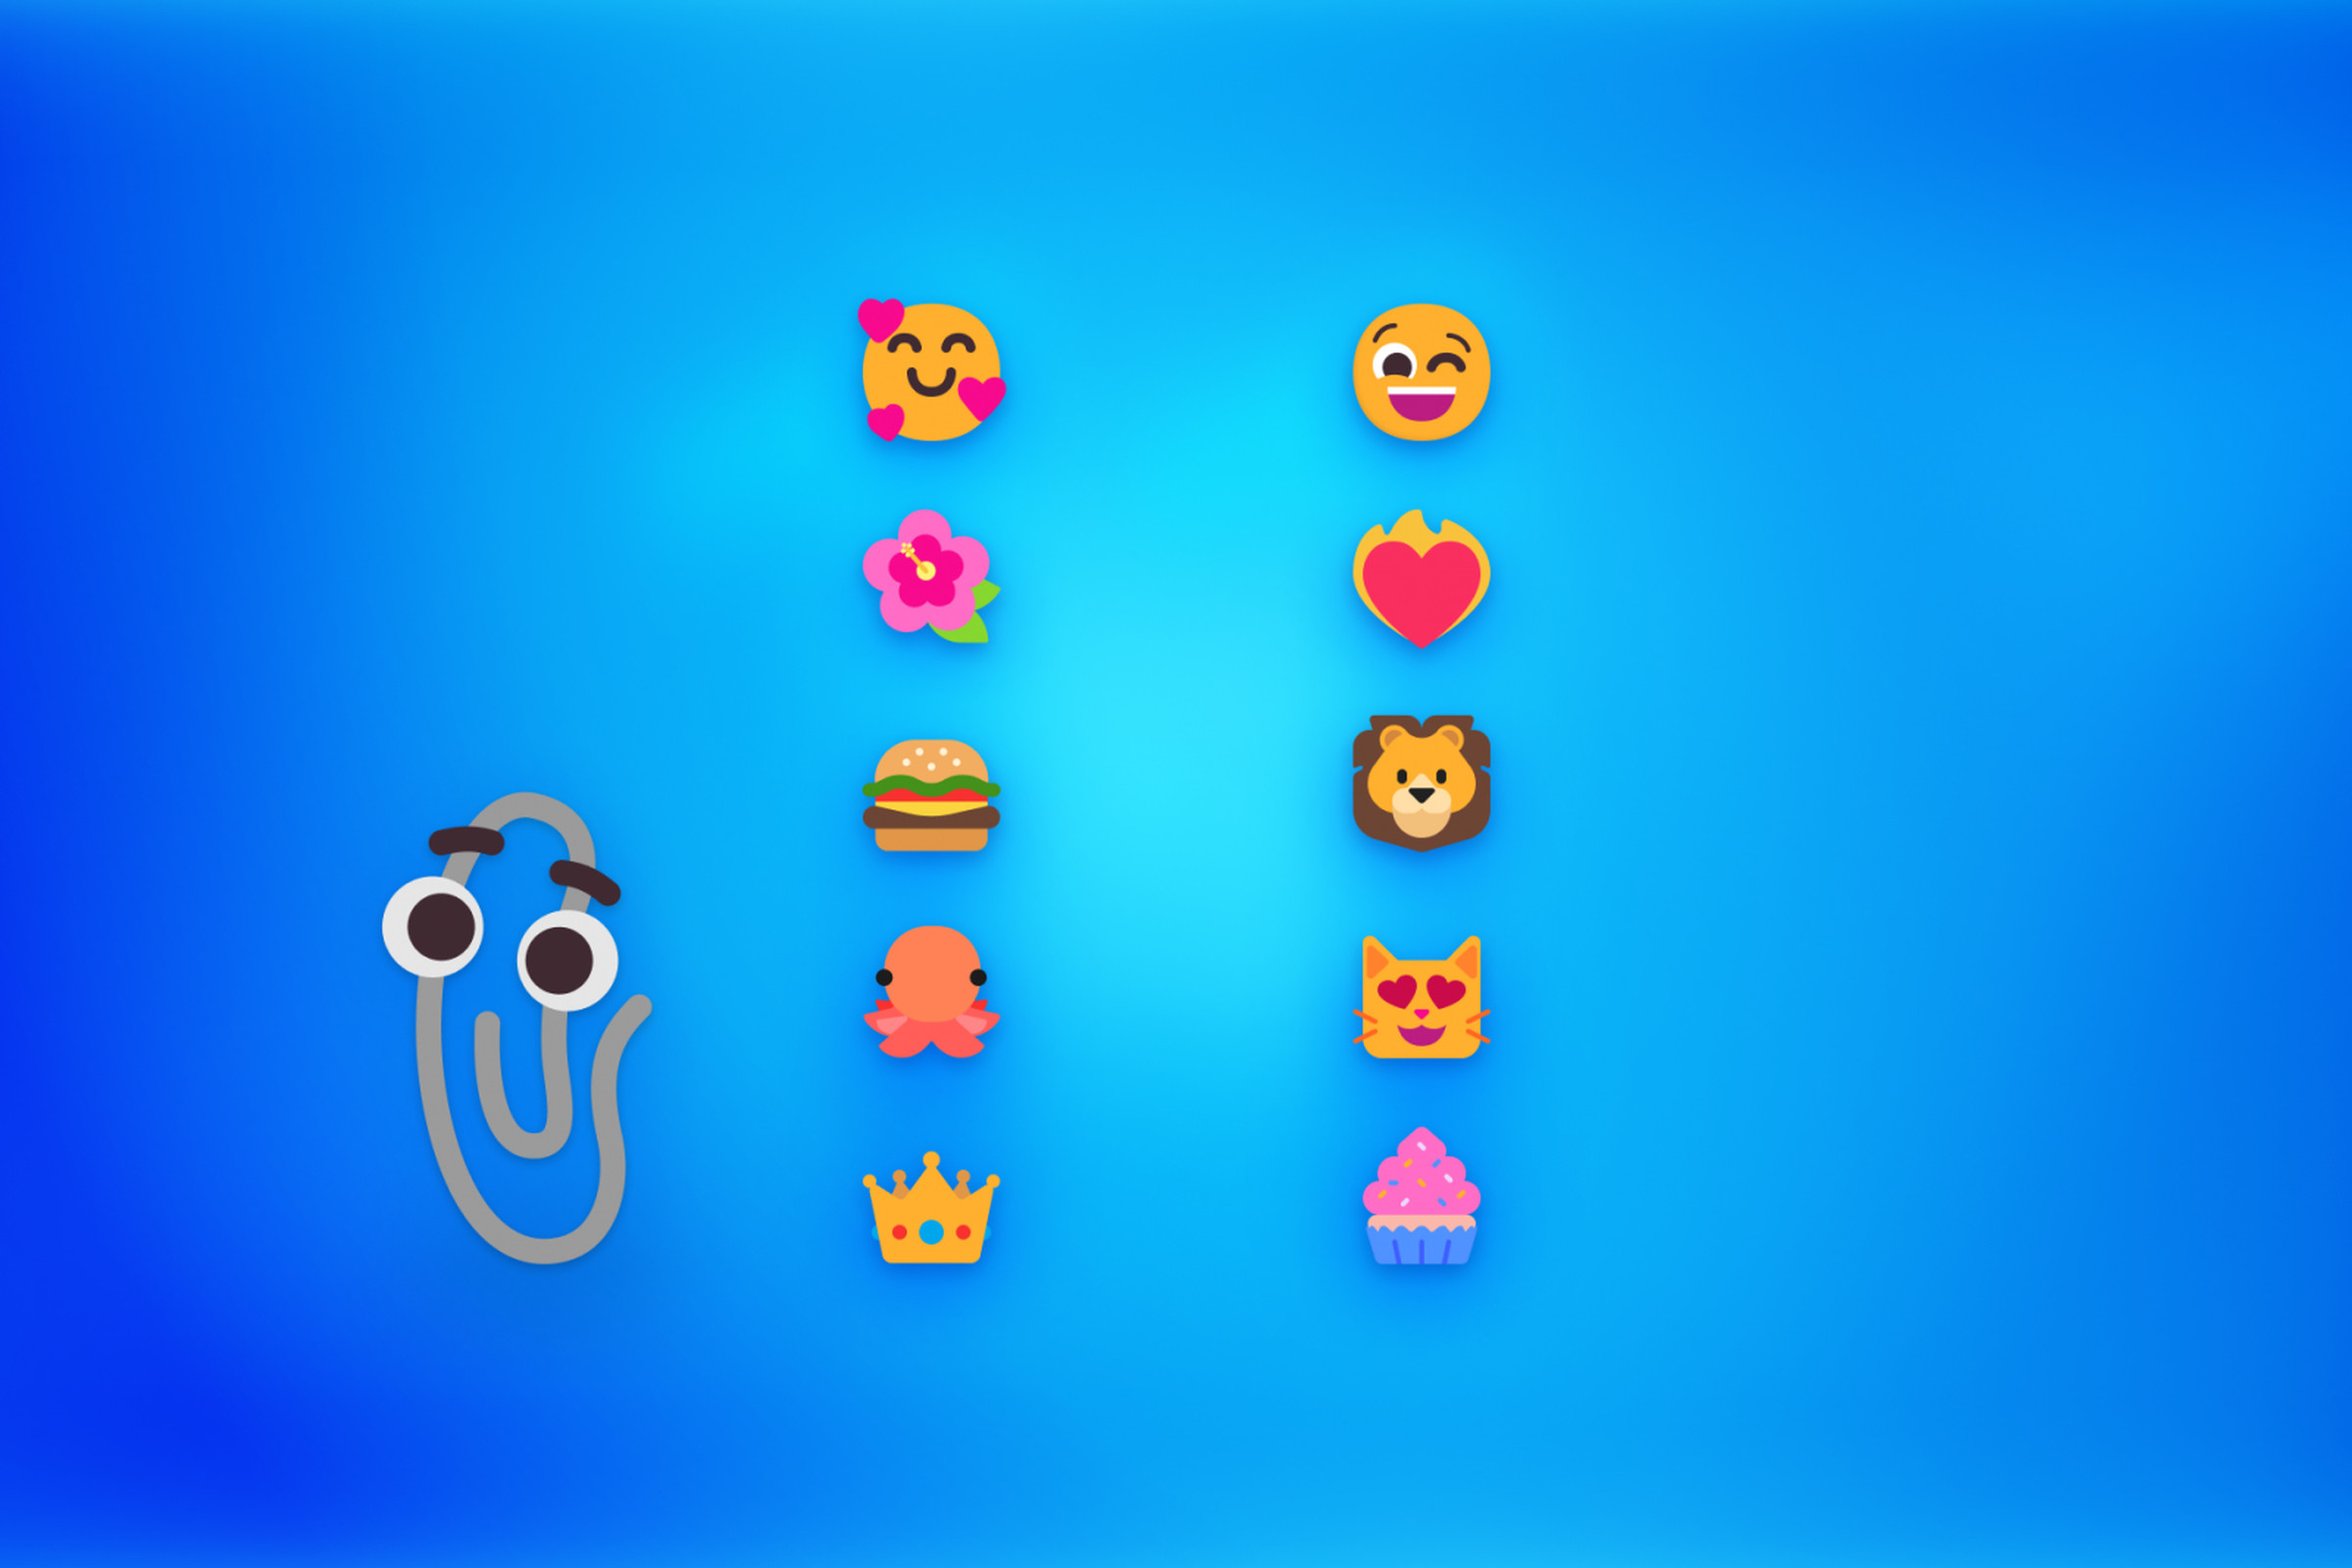 Microsoft’s new emoji for Windows 11.